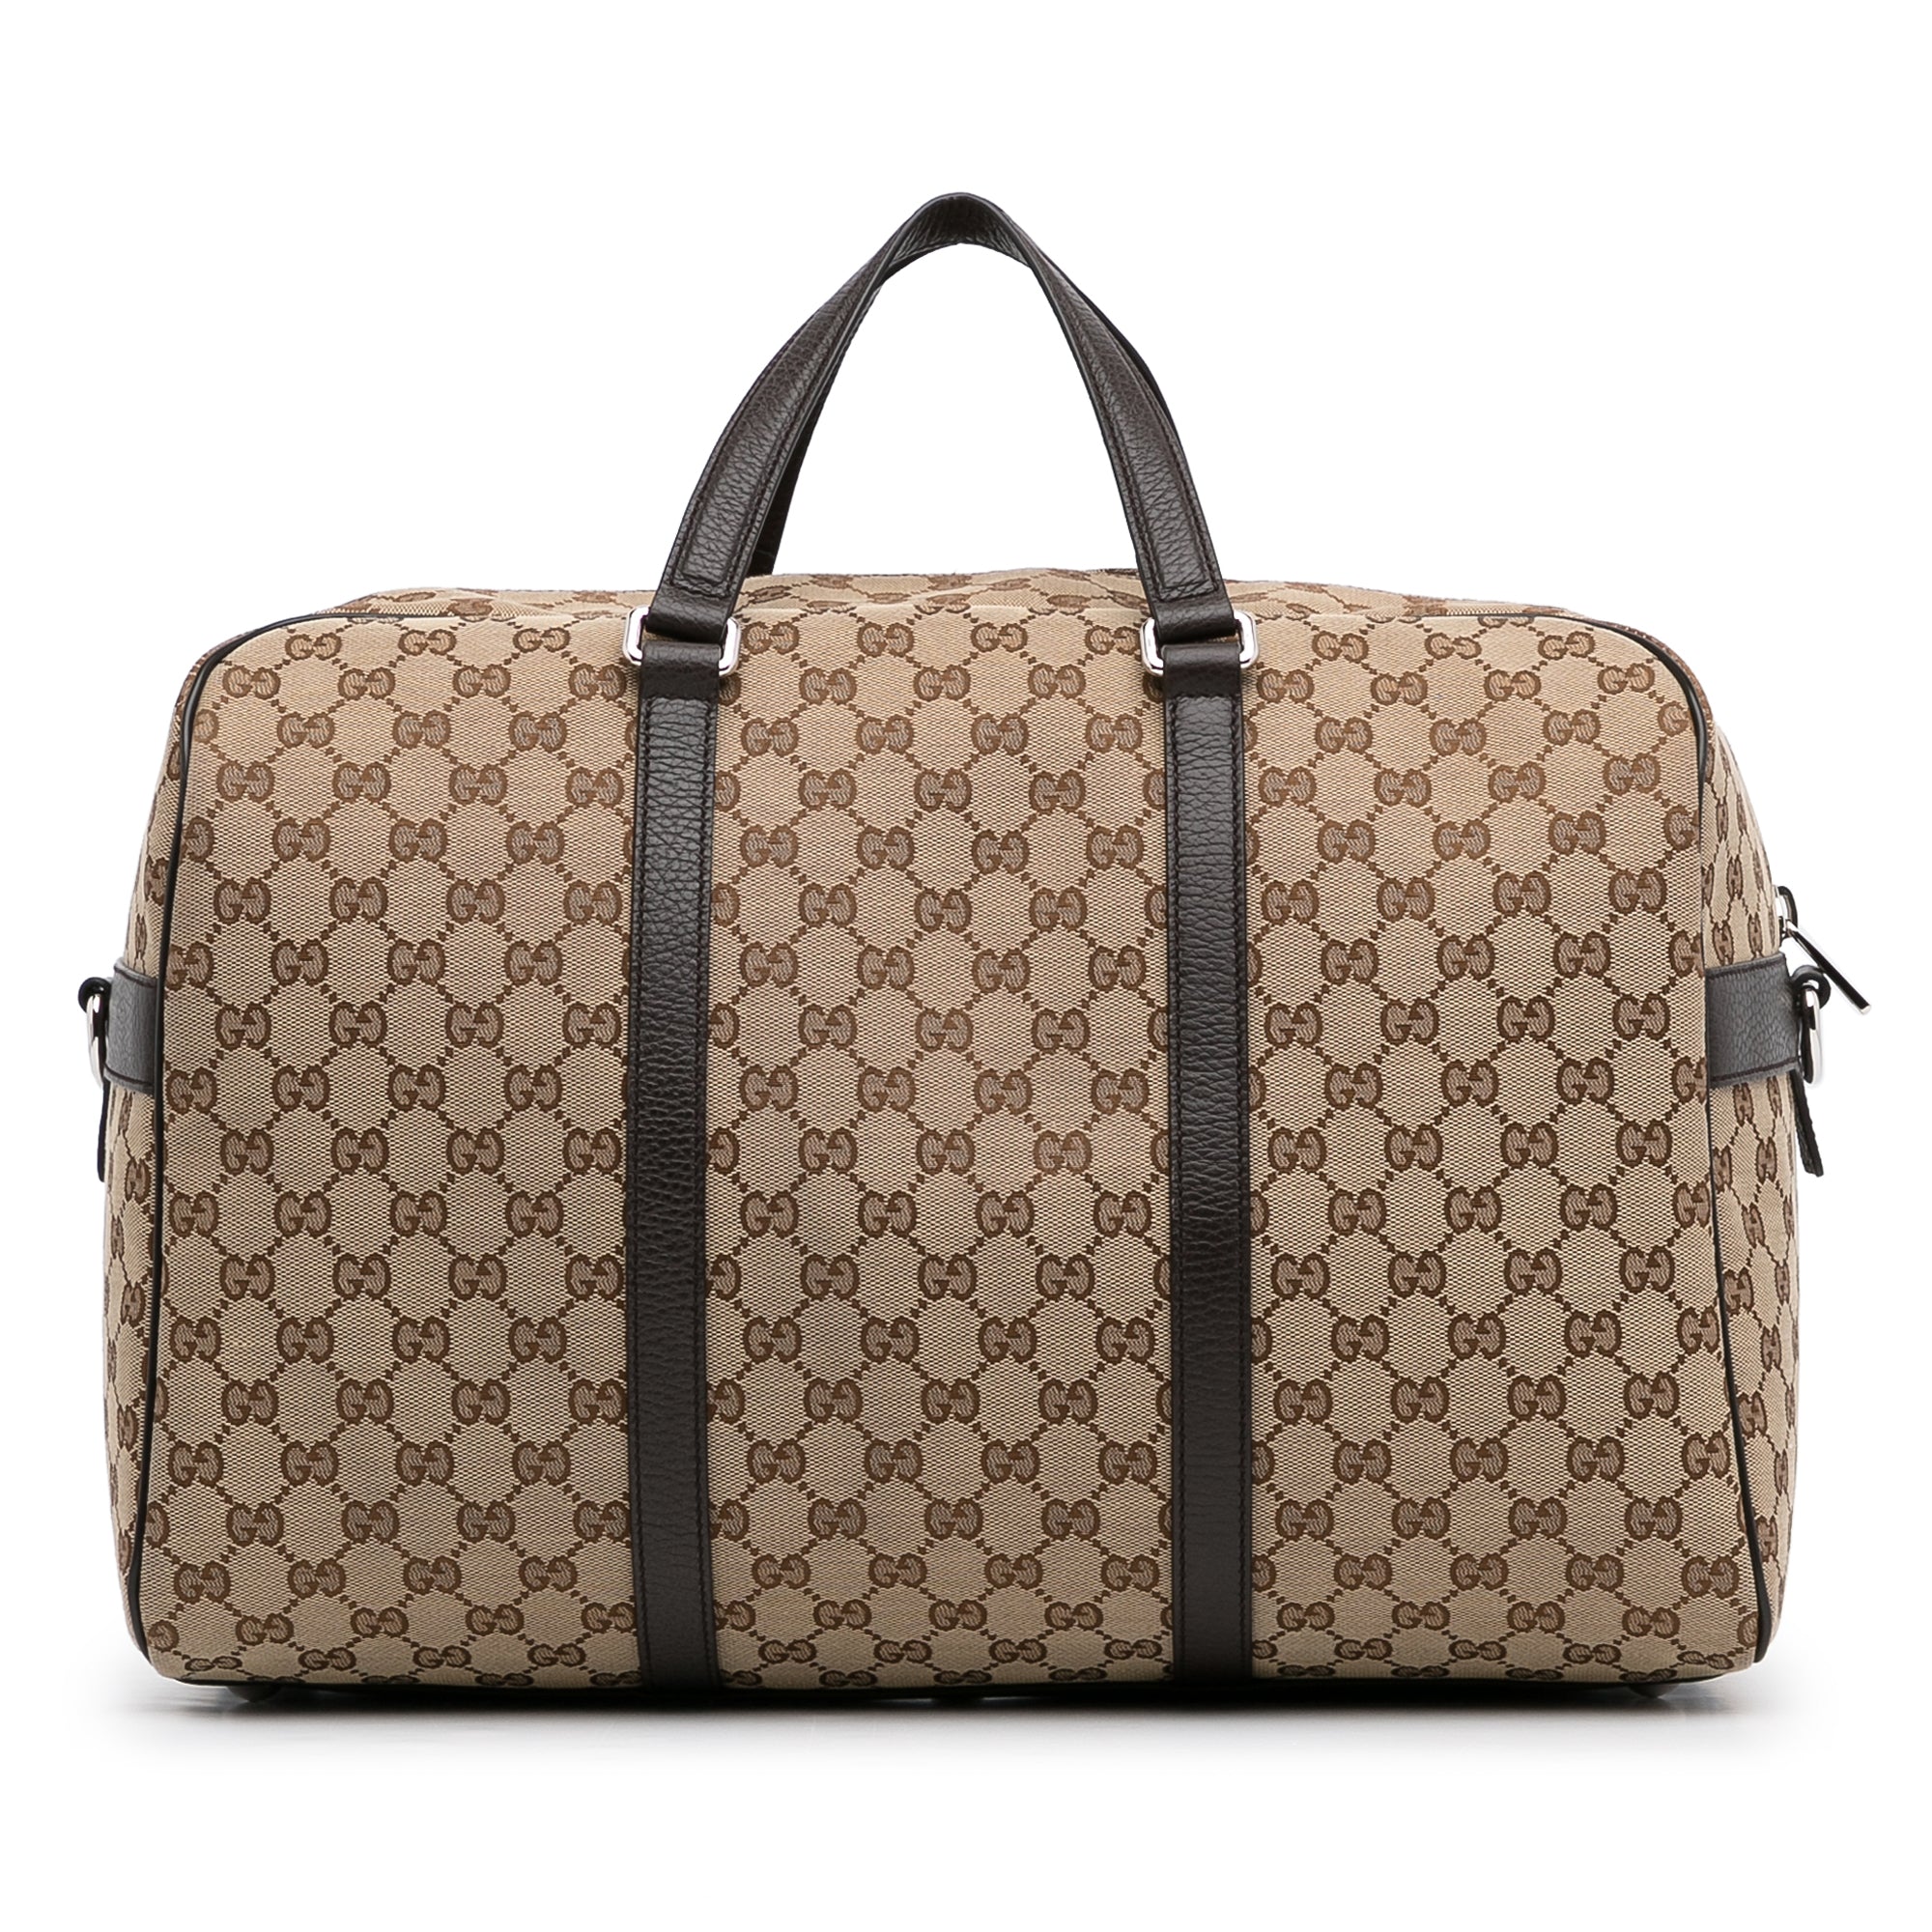 Gucci - Monogram Duffle Bag in Brown Gucci